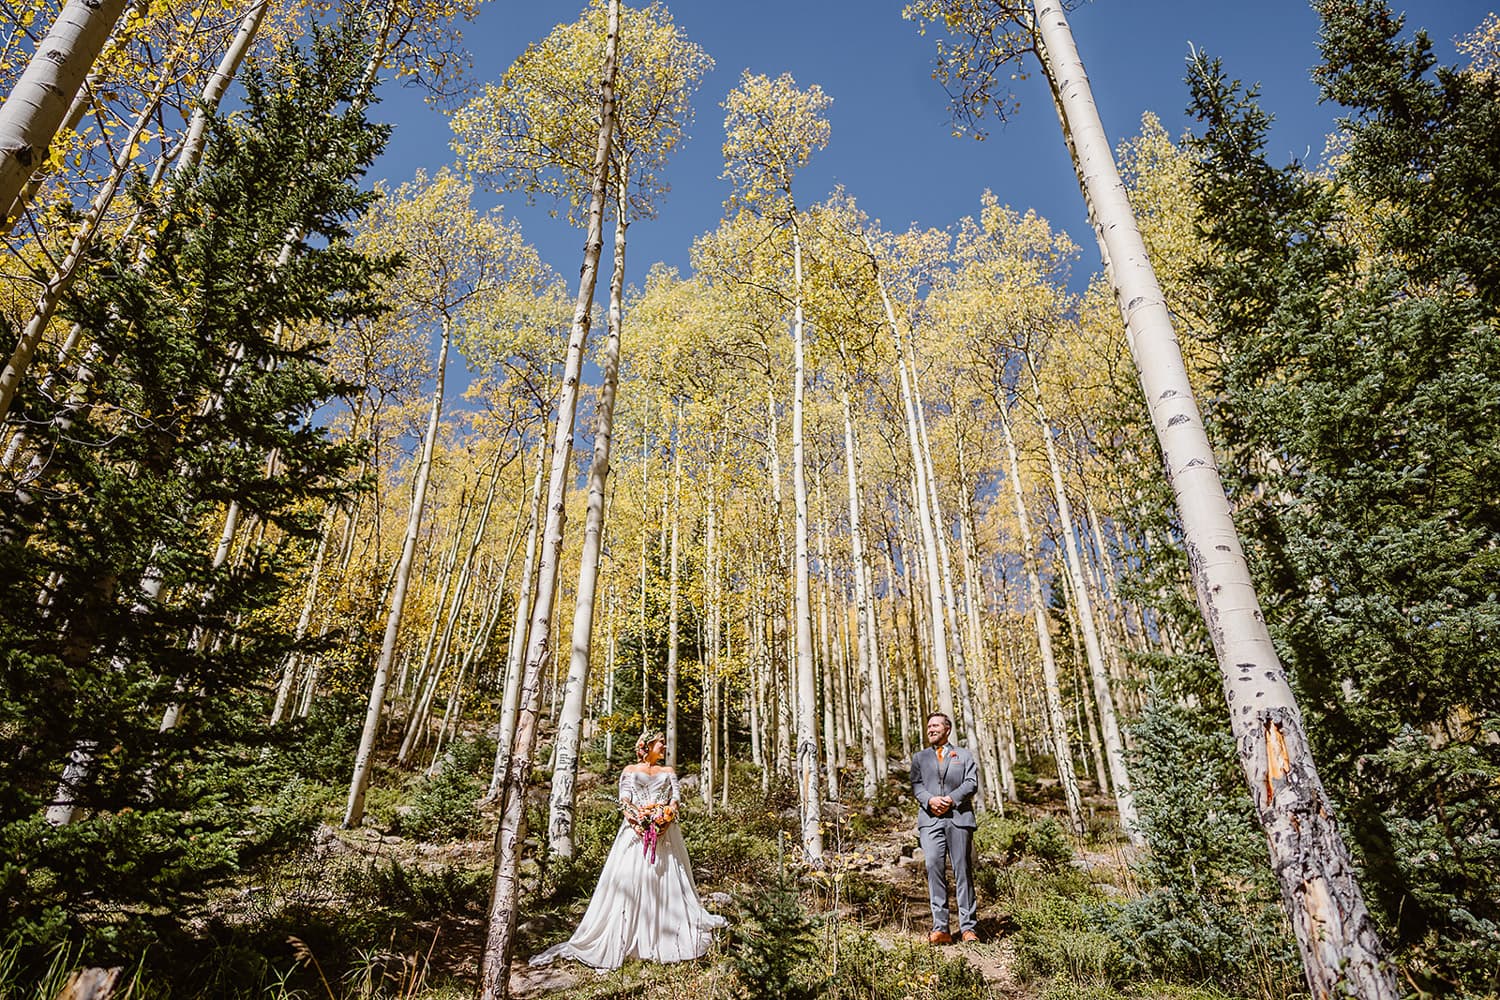 Couple standing beneath the aspen trees in Colorado during their Colorado elopement.